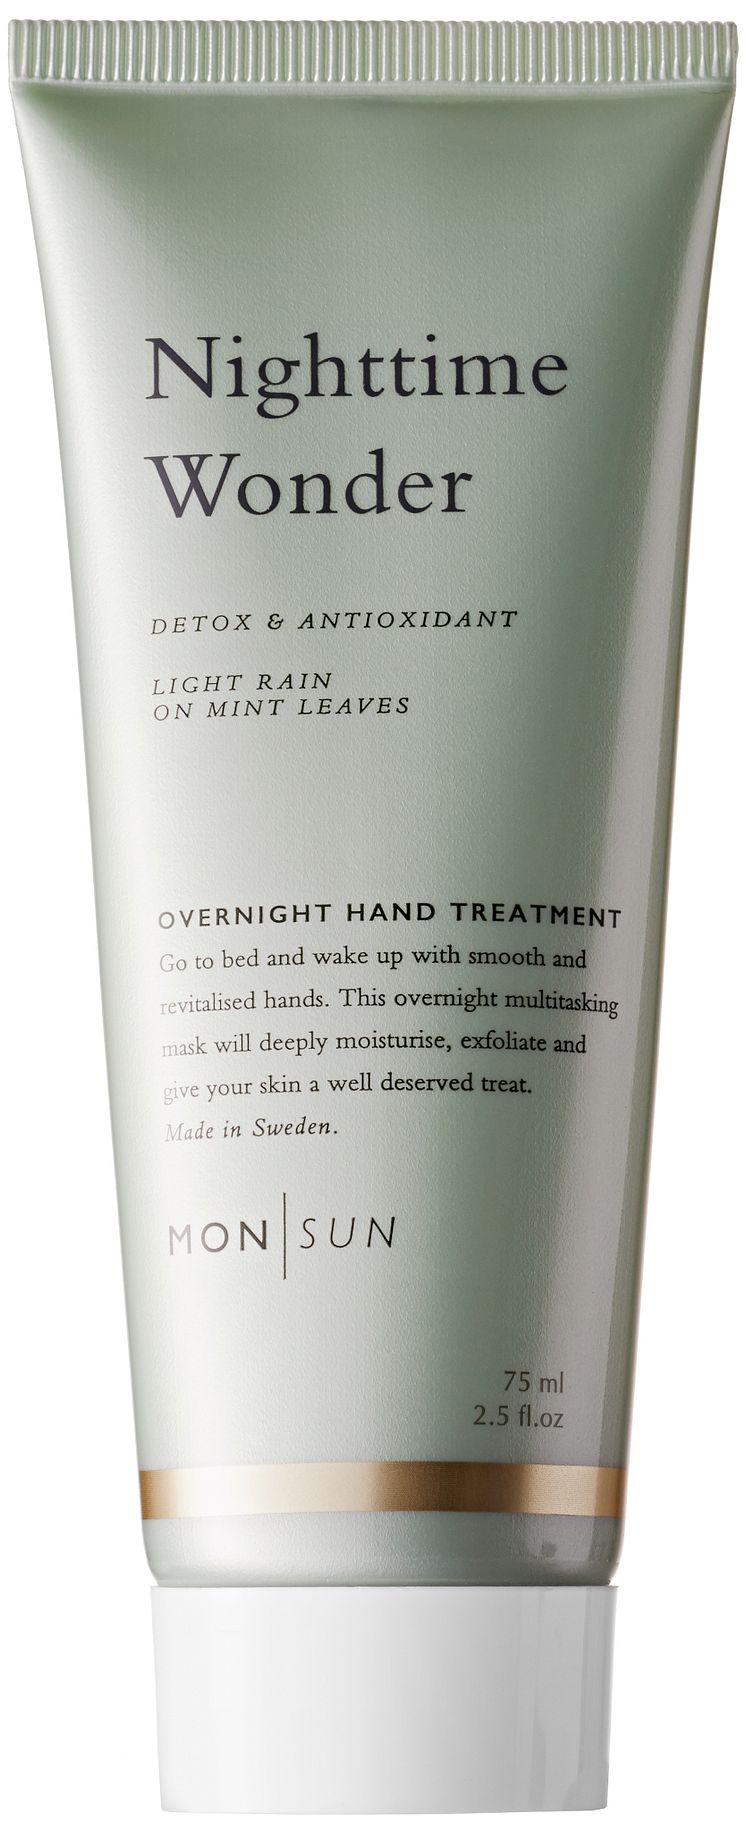 MONSUN_ Nighttime Wonder_Overnight Hand Treatment_Detox Antioxidant